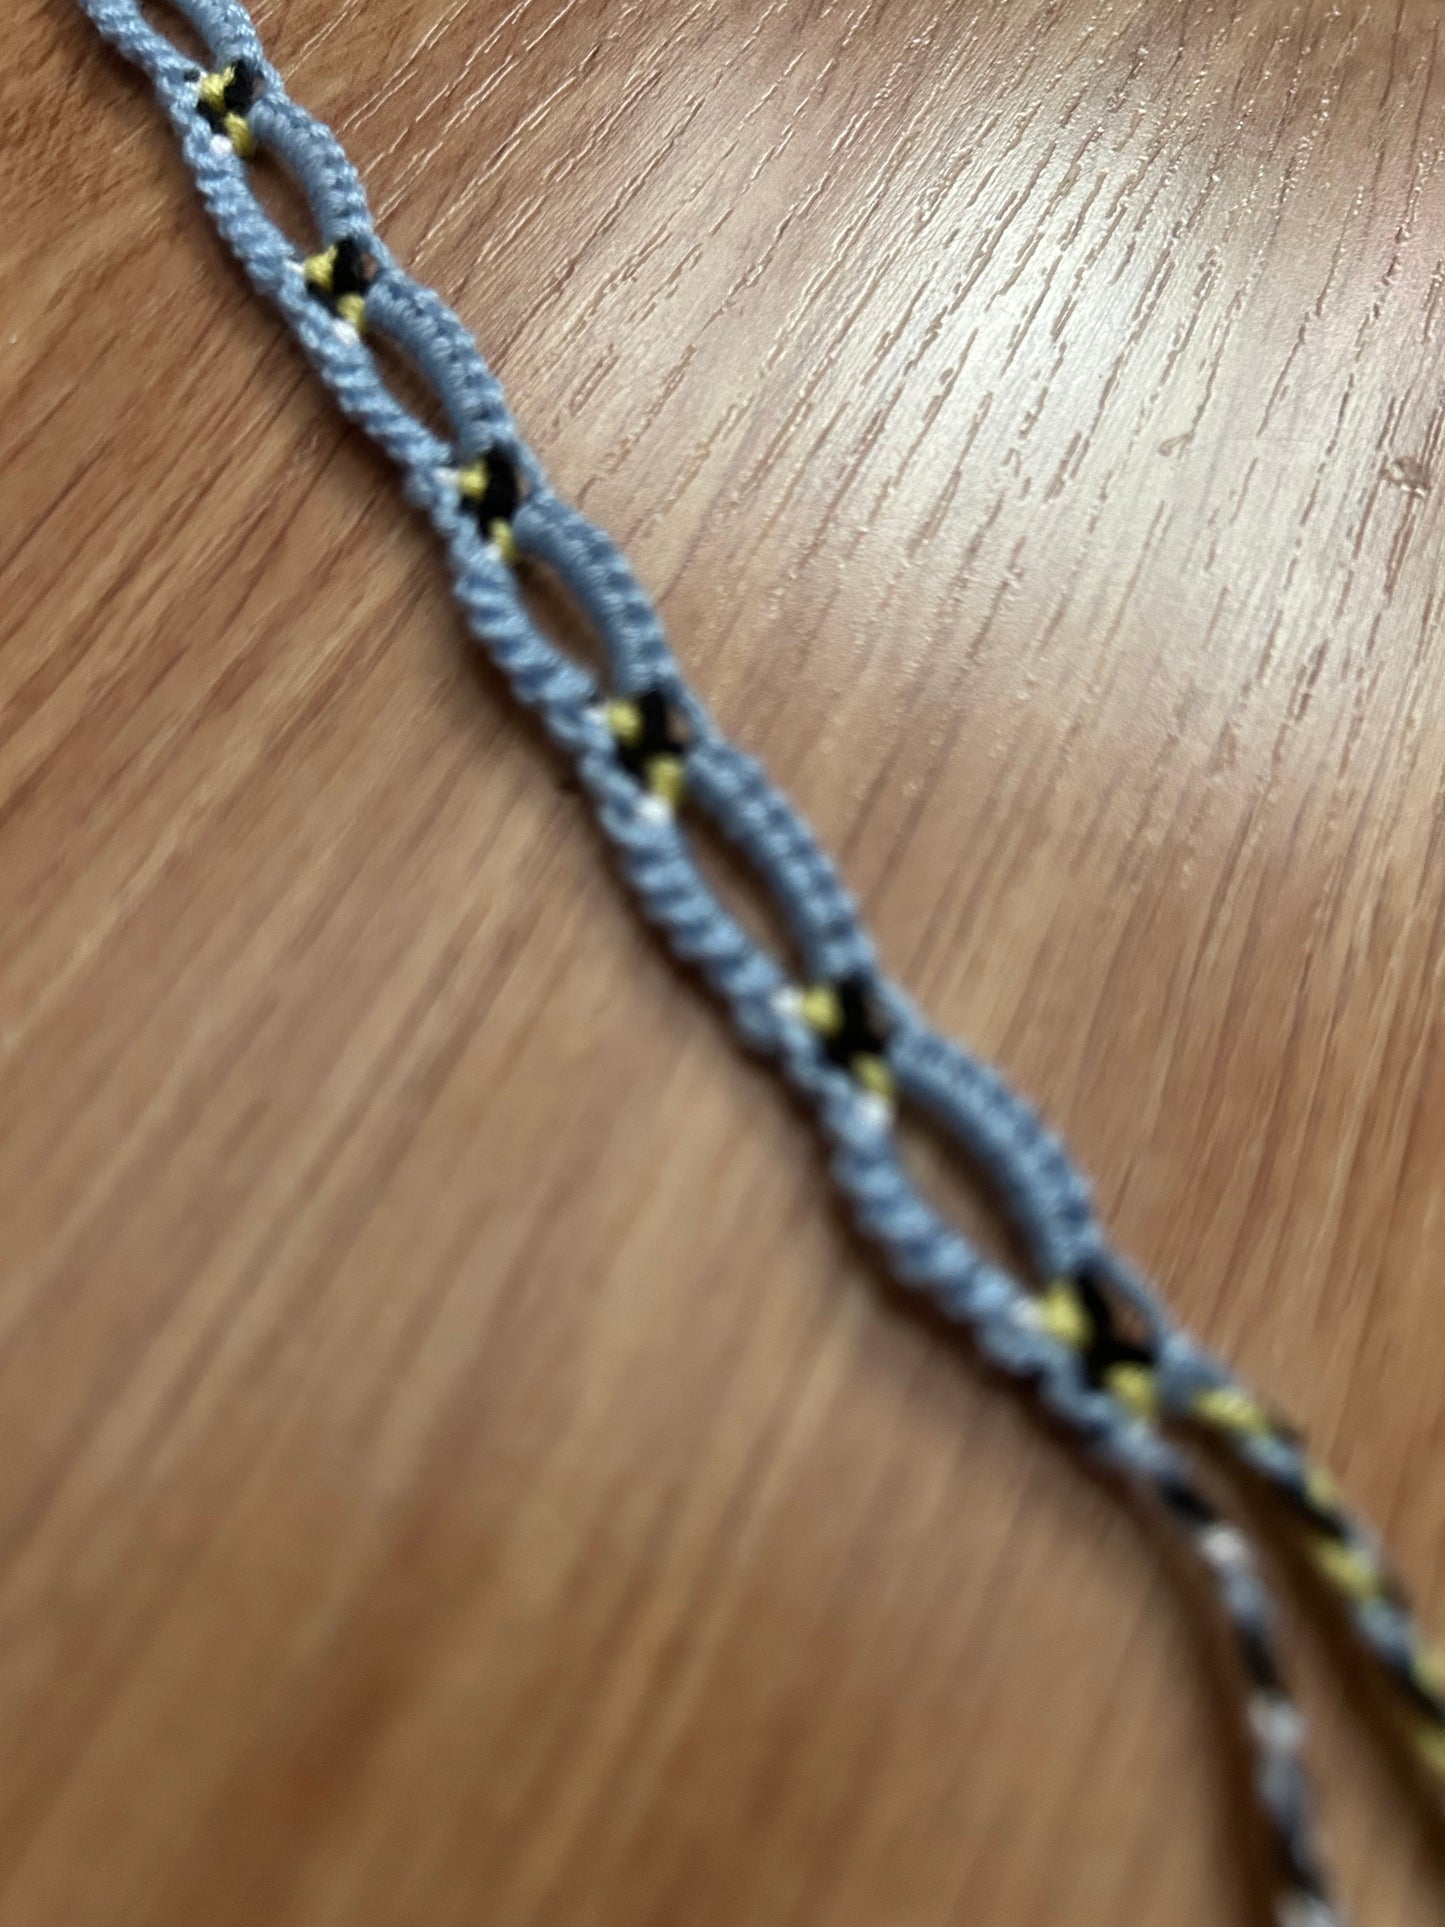 Bee chain bracelet or anklet